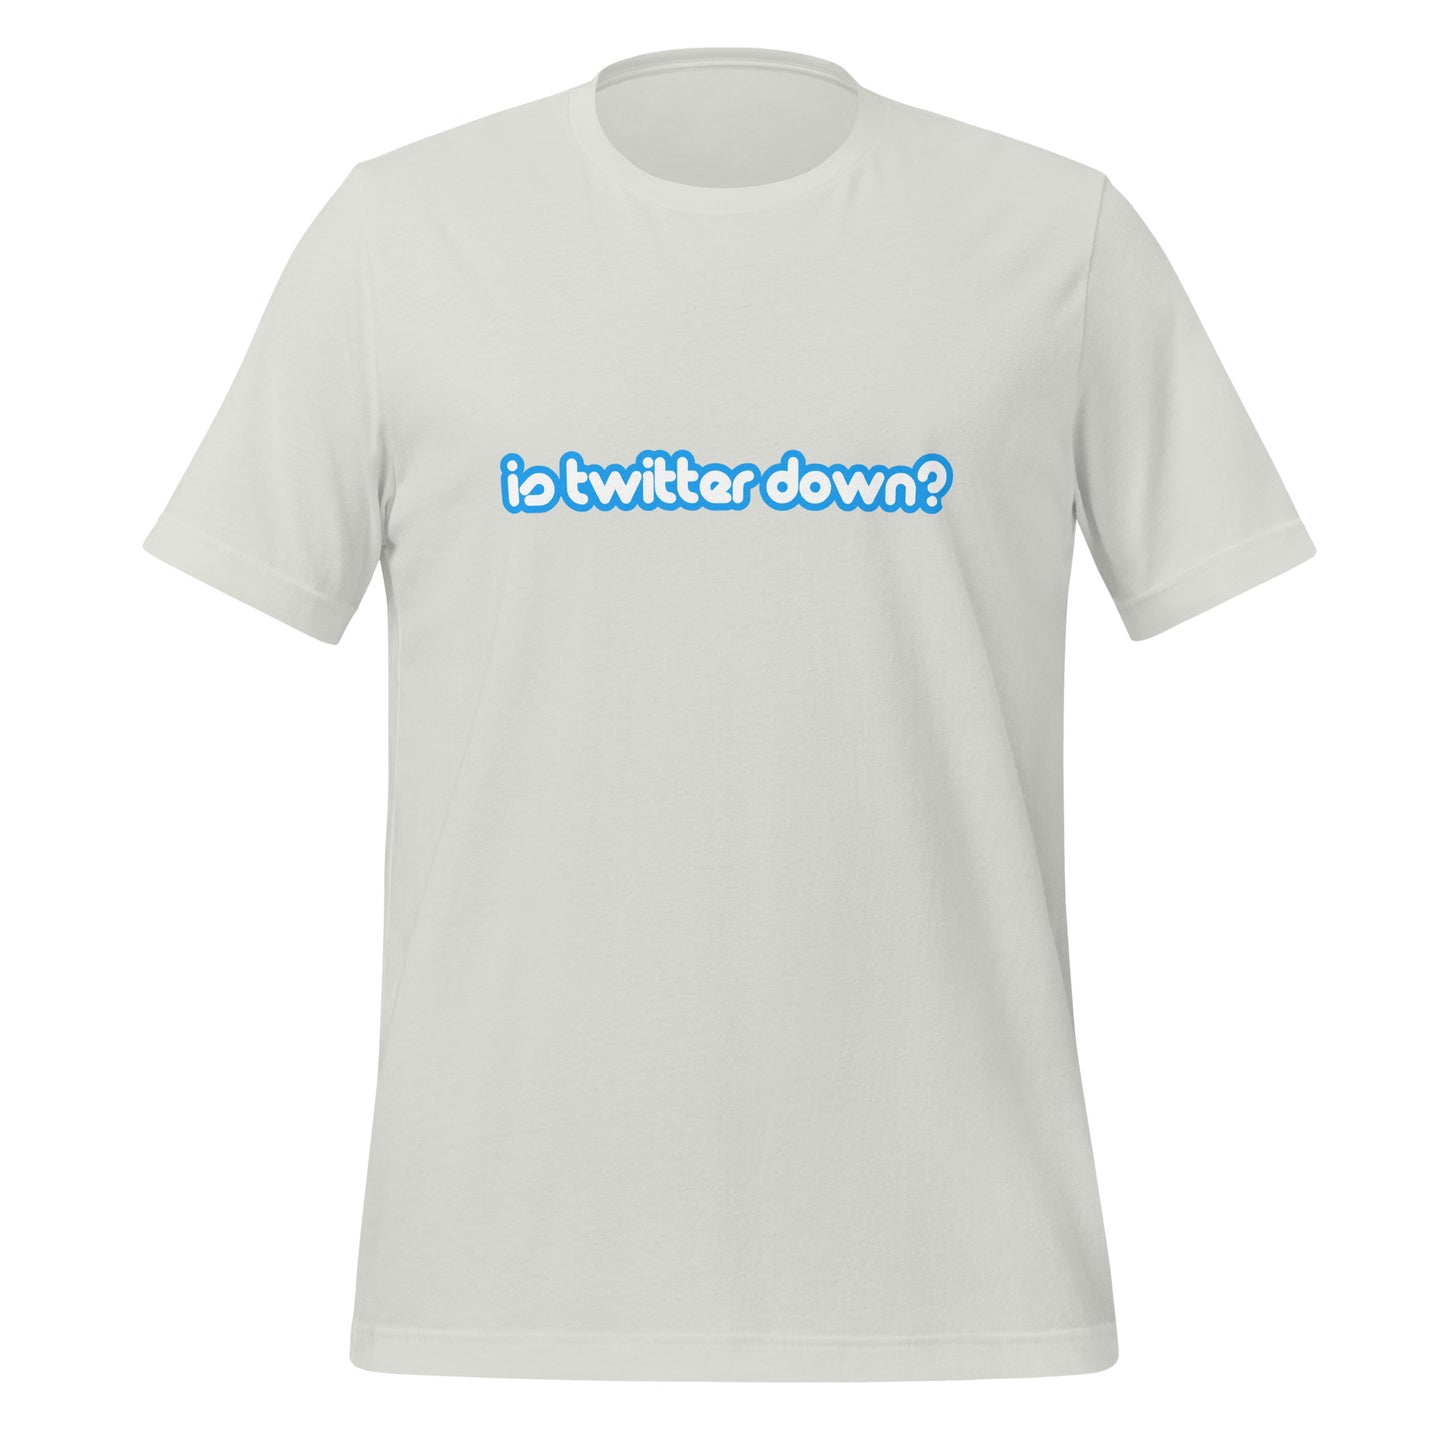 Is Twitter Down? T-Shirt (unisex)